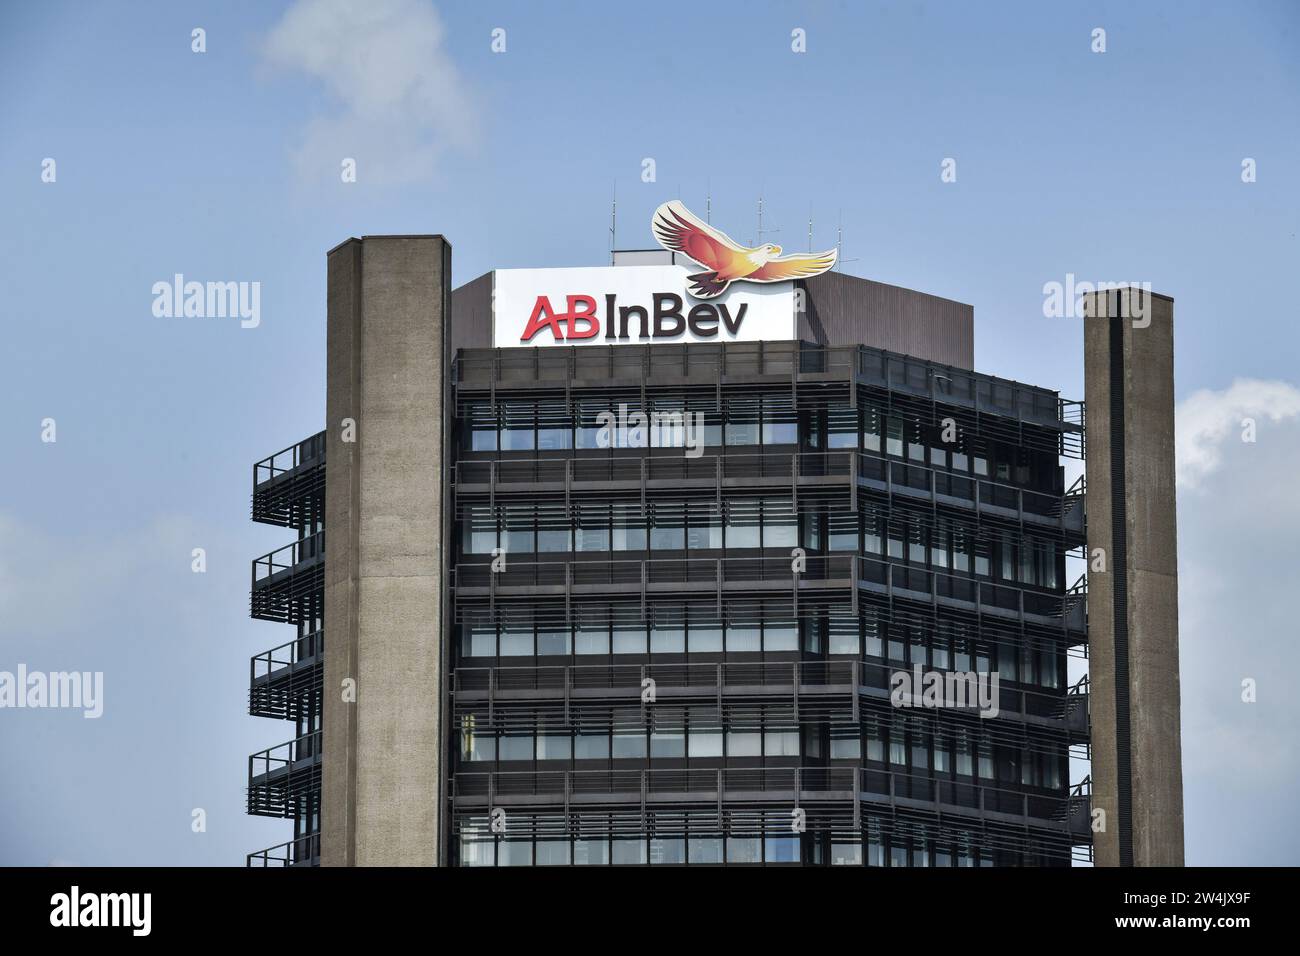 Becks Bier Brauerei, Anheuser Busch InBev, Bremen, Allemagne Banque D'Images